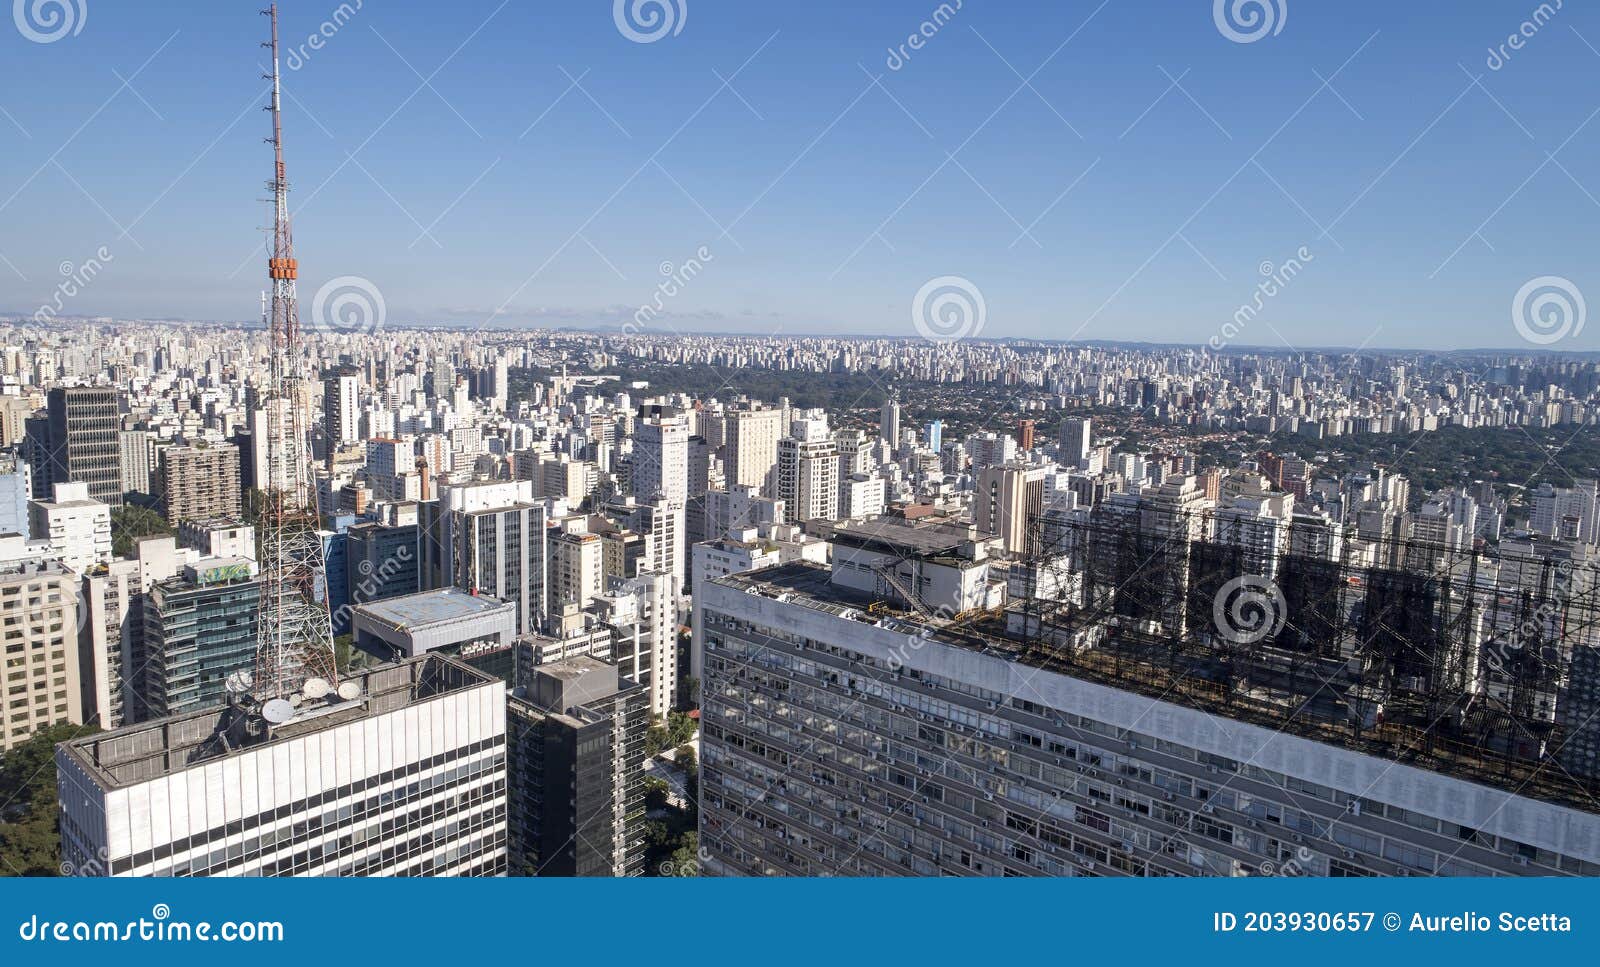 aerial view of sao paulo city, brazil